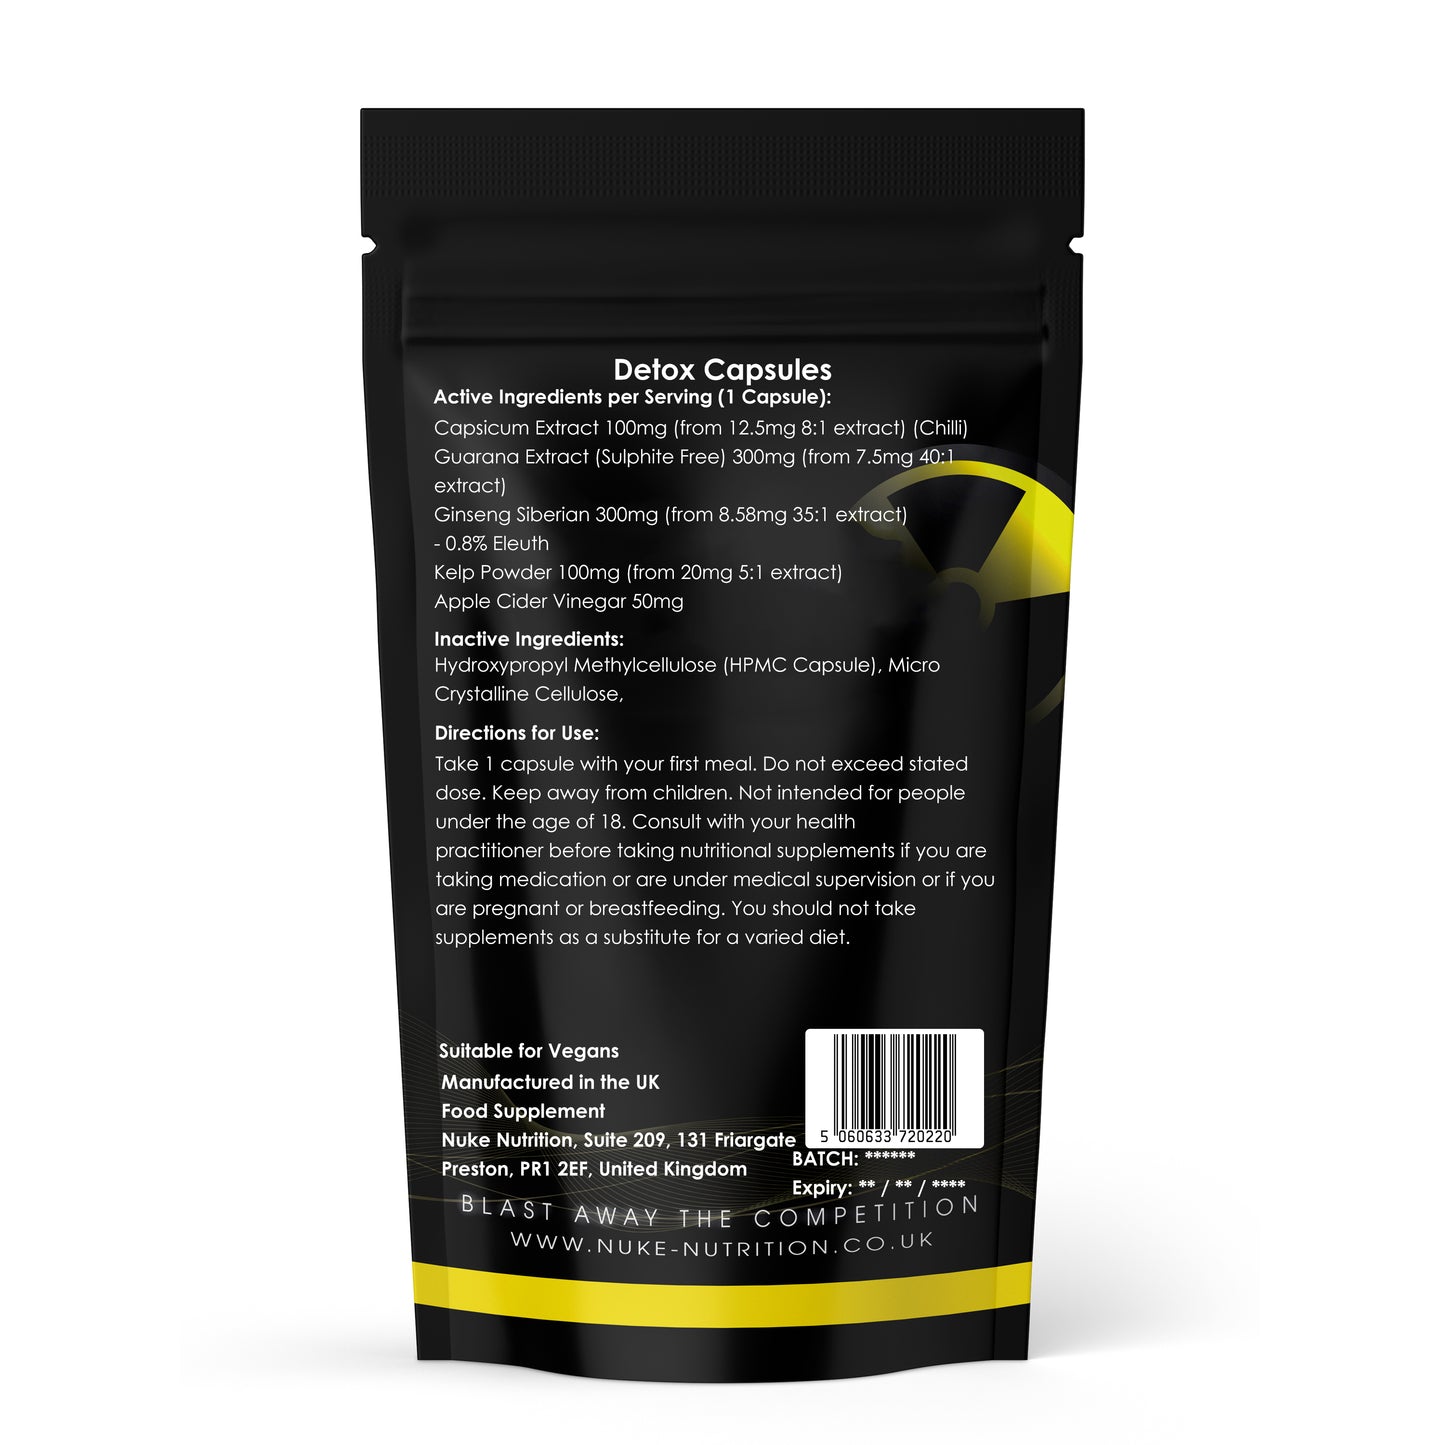 Detox 850mg Capsules - Apple Cider Vinegar, Capsicum, Kelp, Ginseng, Guarana Digestive Support & Metabolism